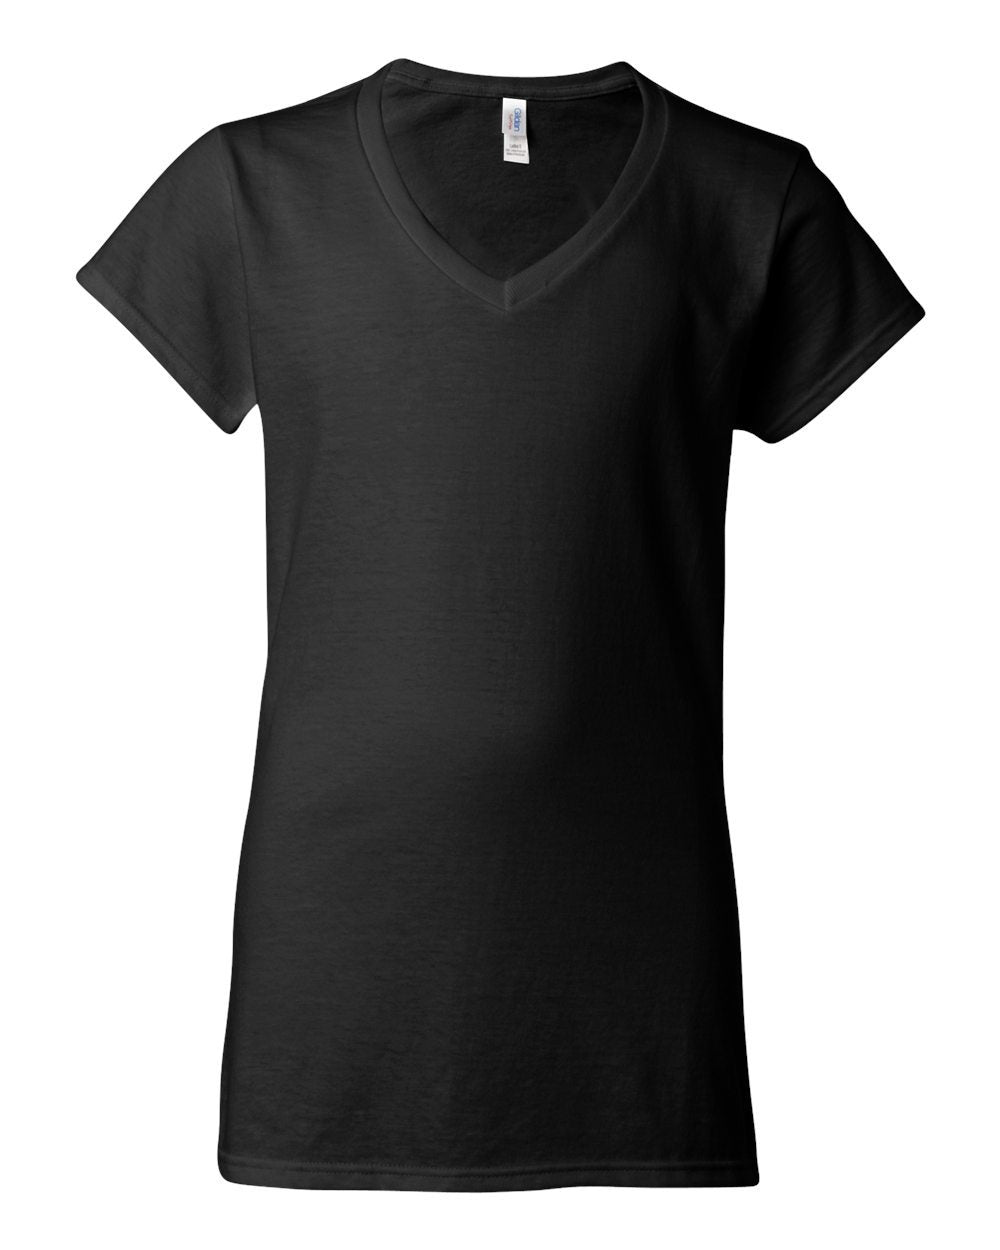 Ladies V-neck Black Cotton T-shirt